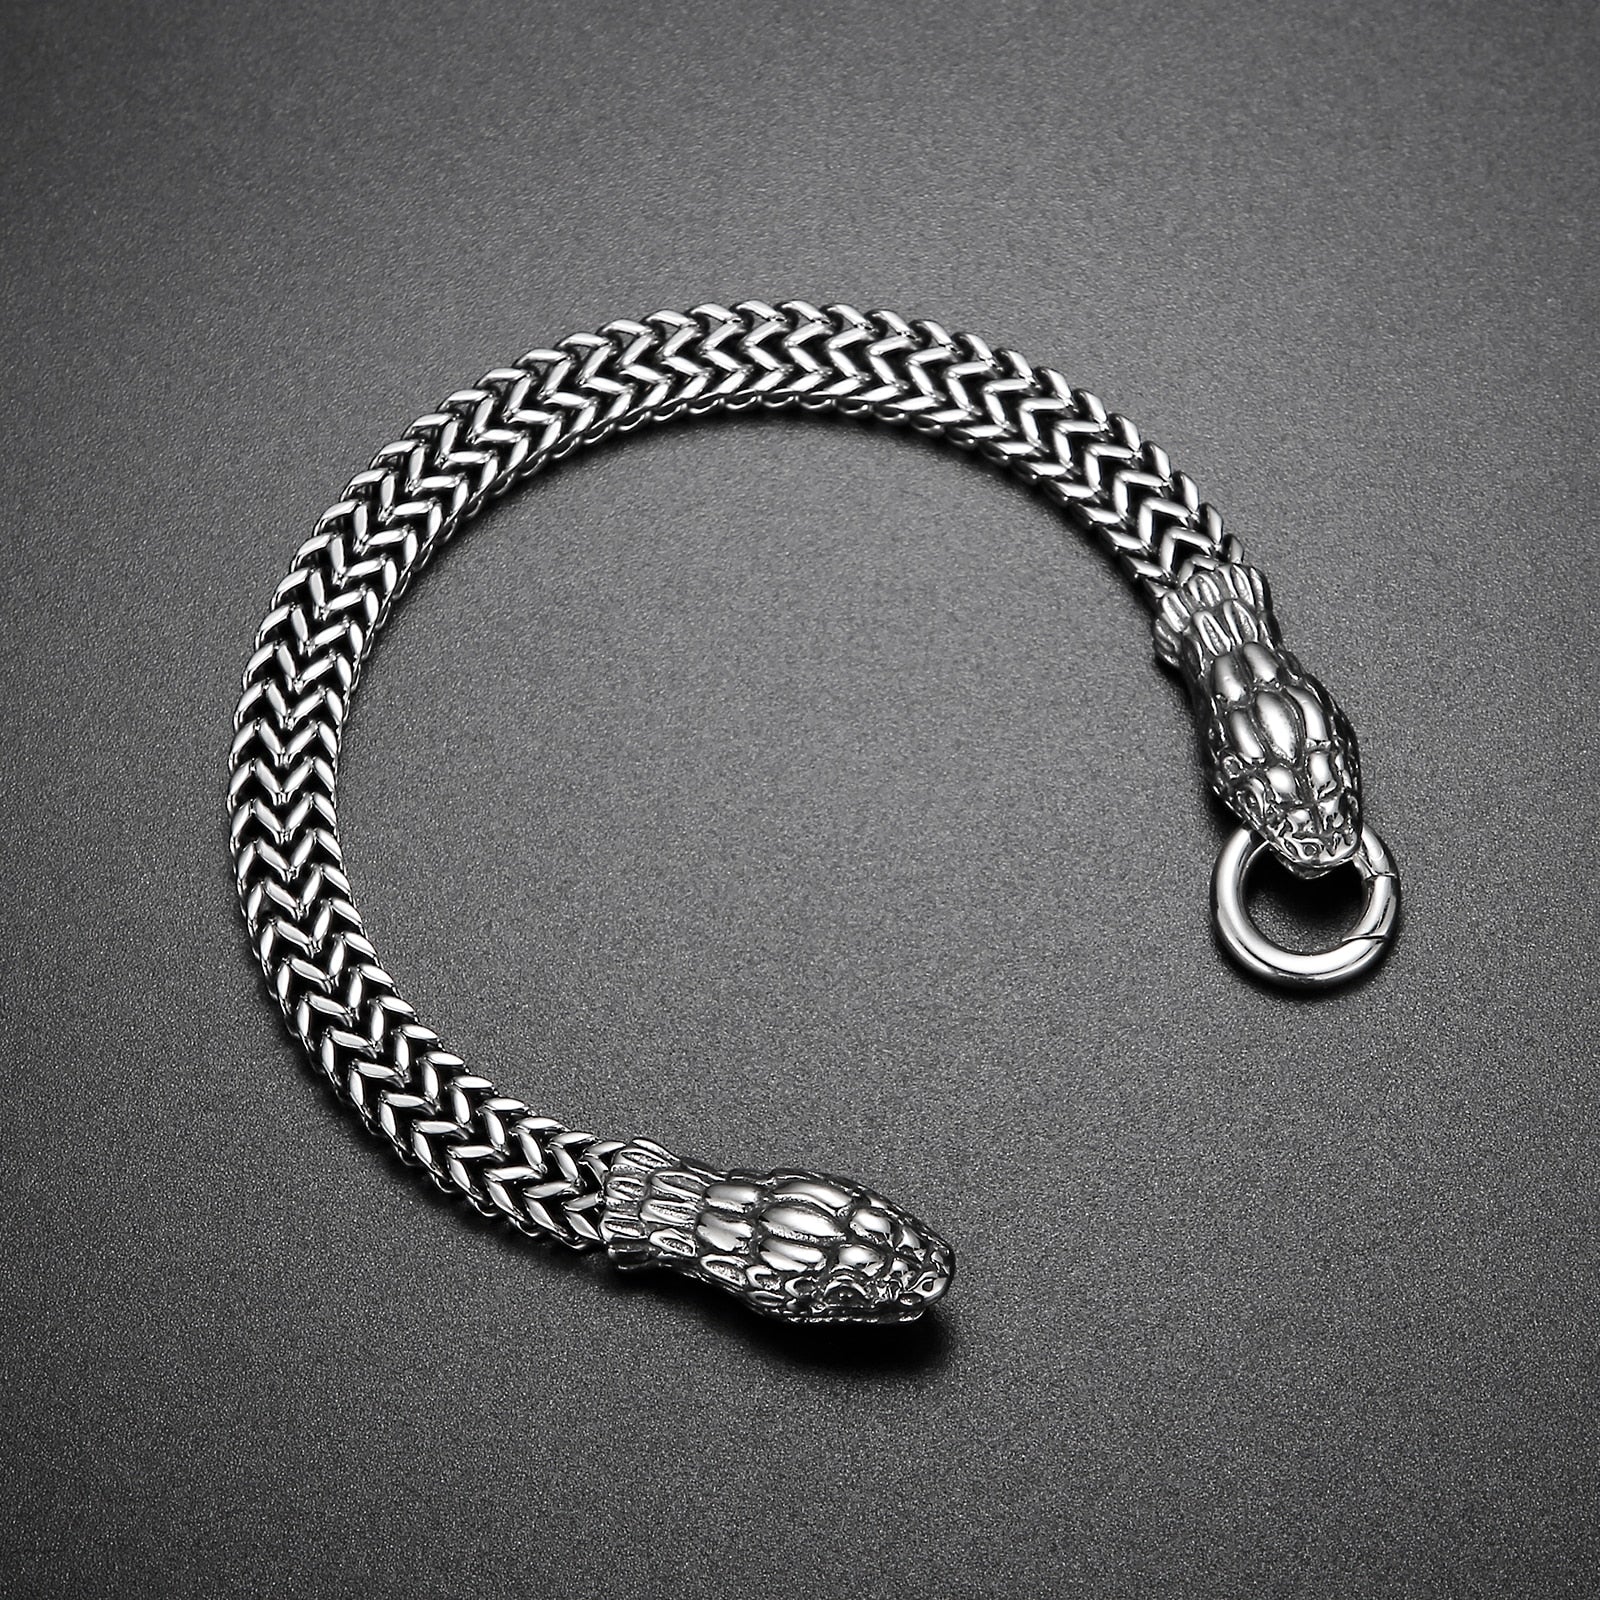 Bracciale Serpente in Acciaio Inossidabile - EkoWorld Jewels Bracciale